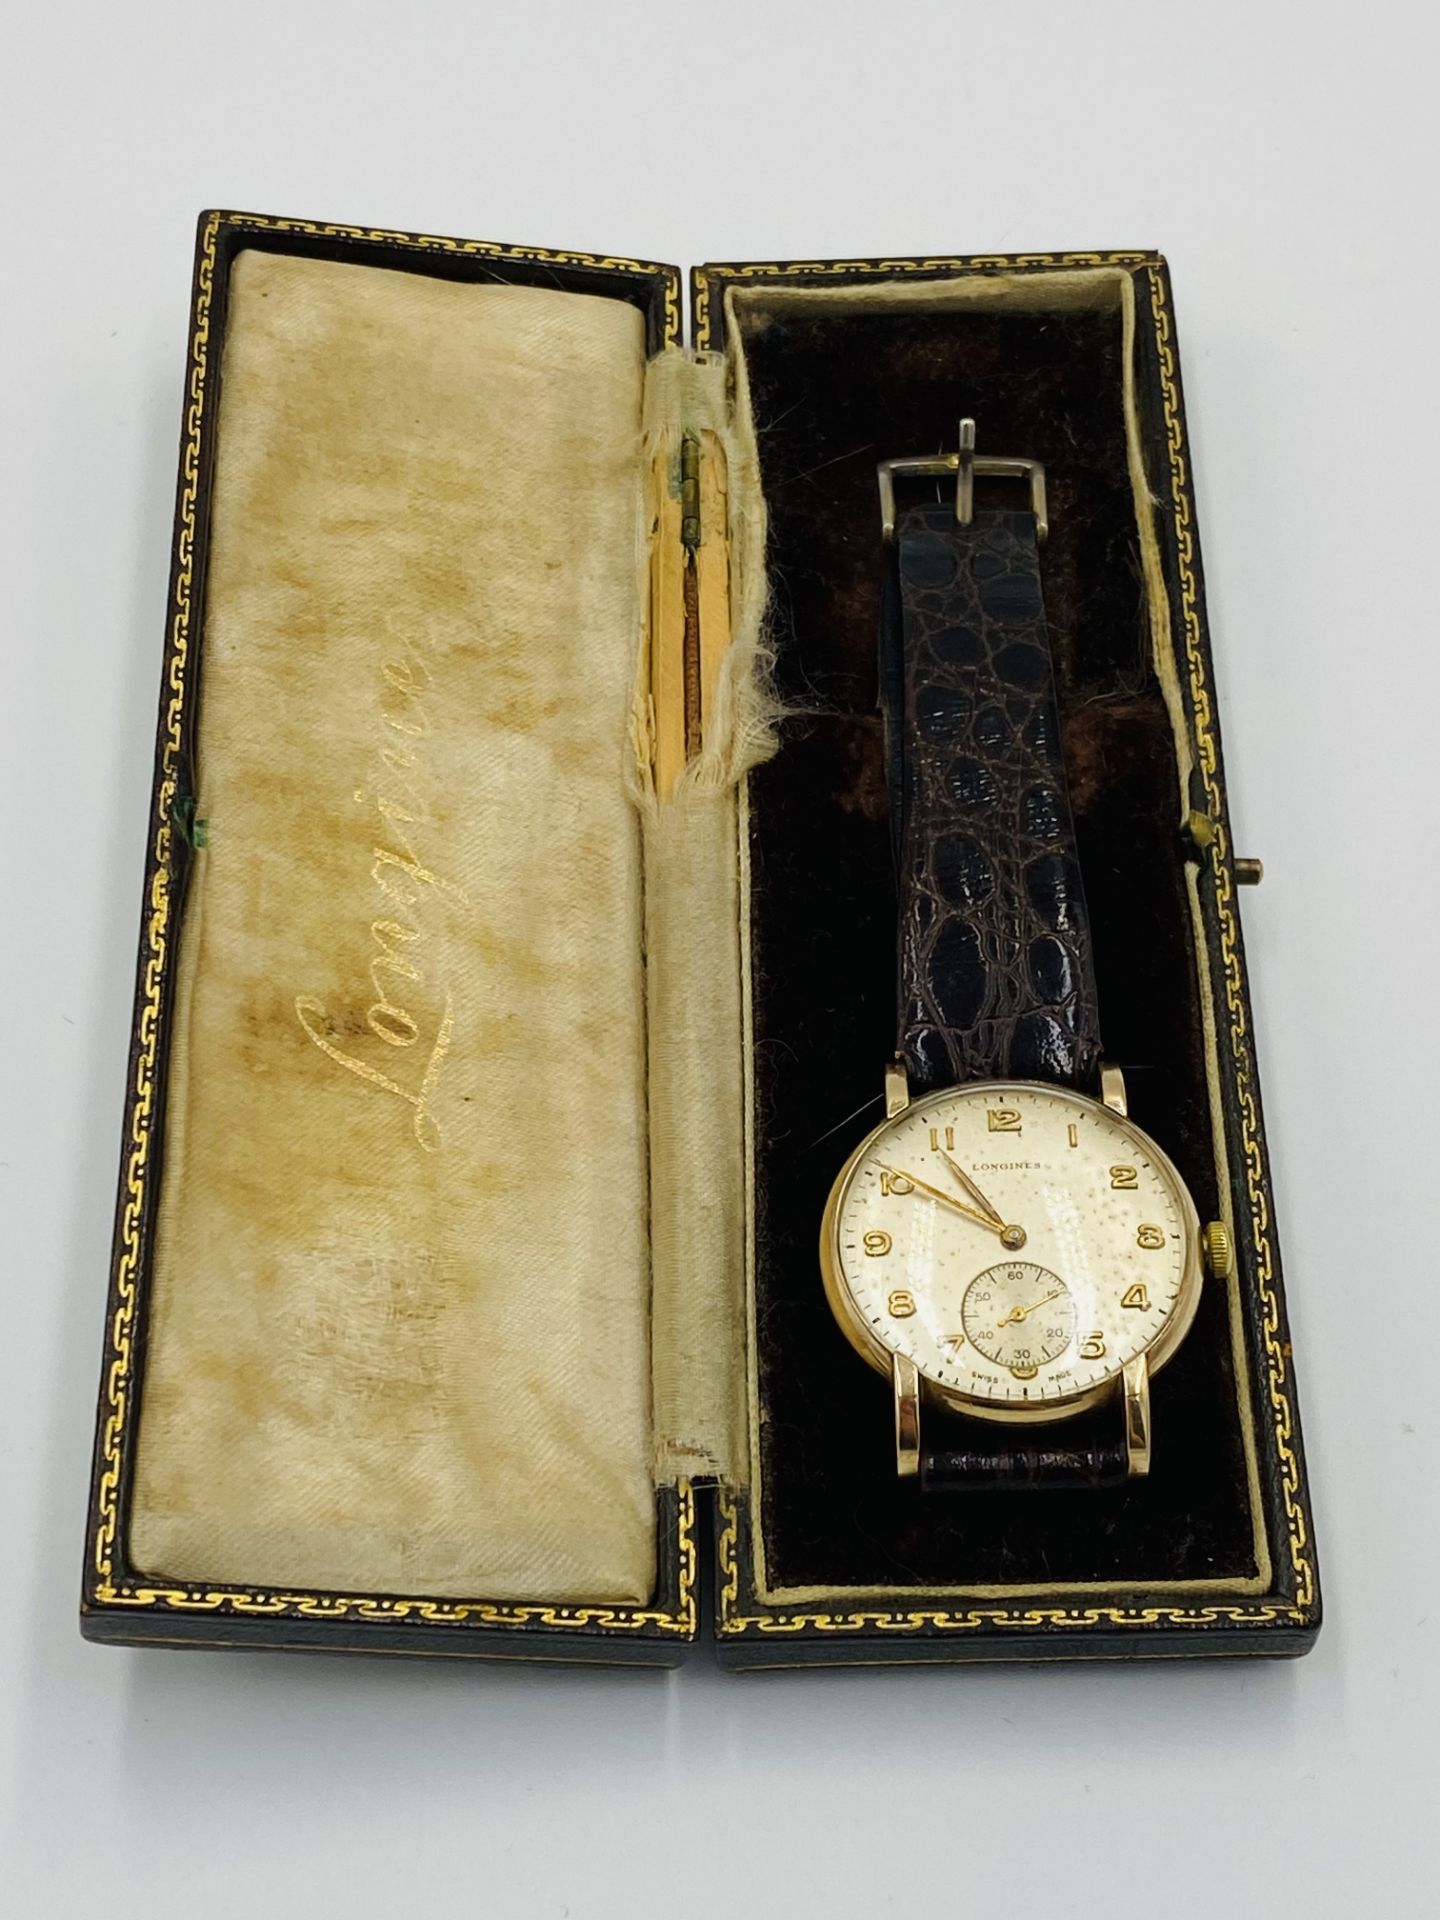 Gentlemans Longines 17 jewel manual wind wristwatch, in 9ct gold case - Image 2 of 5